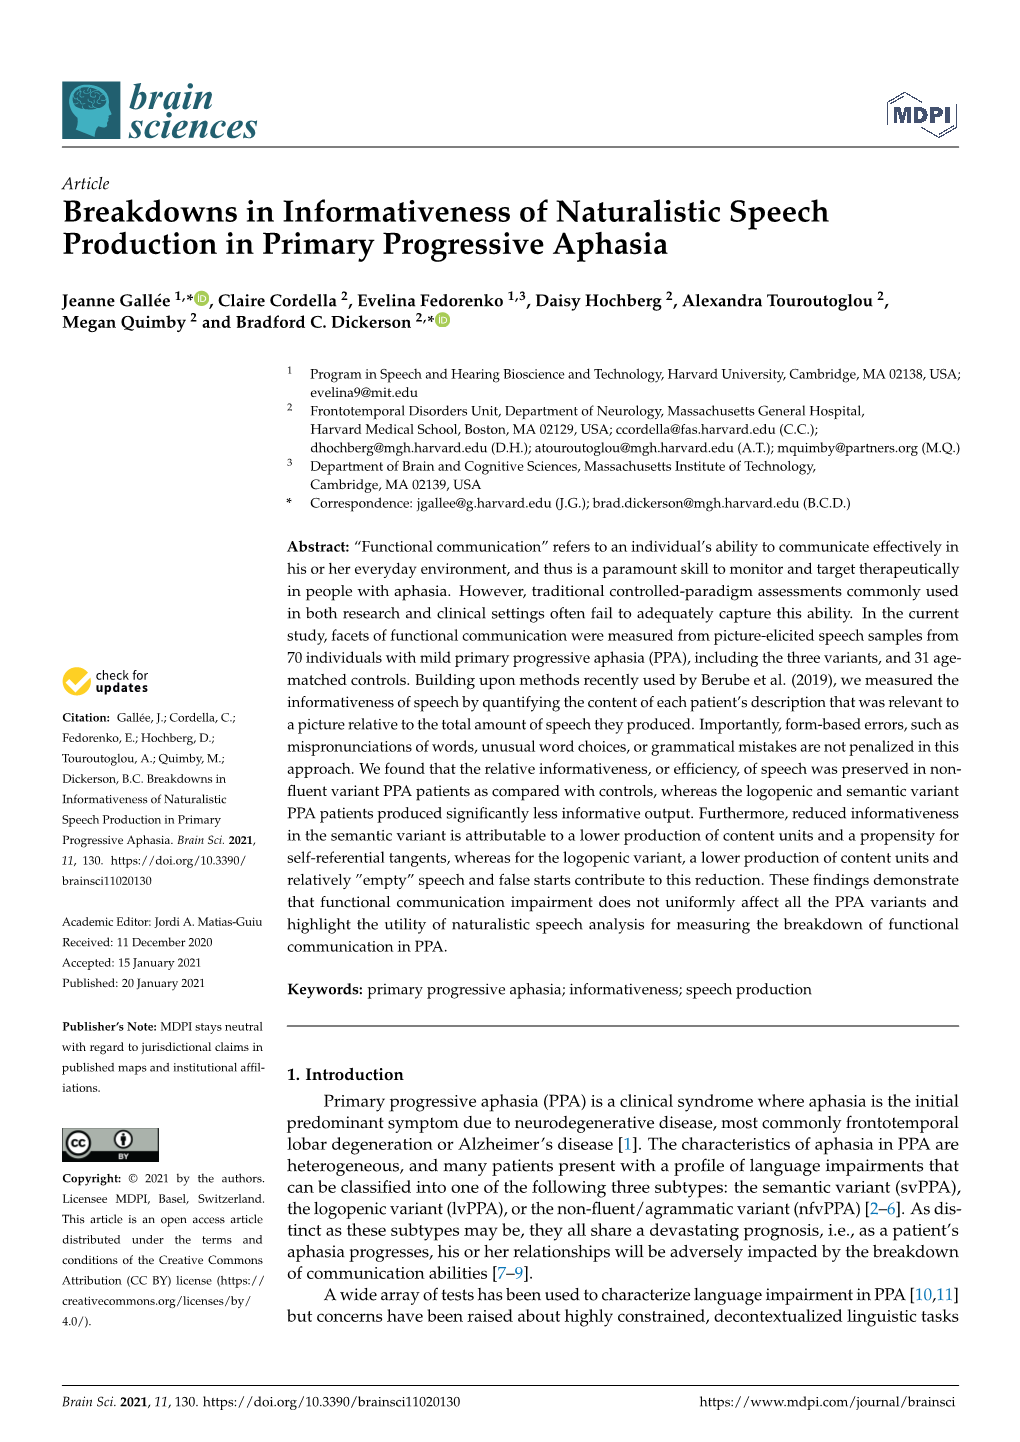 Breakdowns in Informativeness of Naturalistic Speech Production in Primary Progressive Aphasia